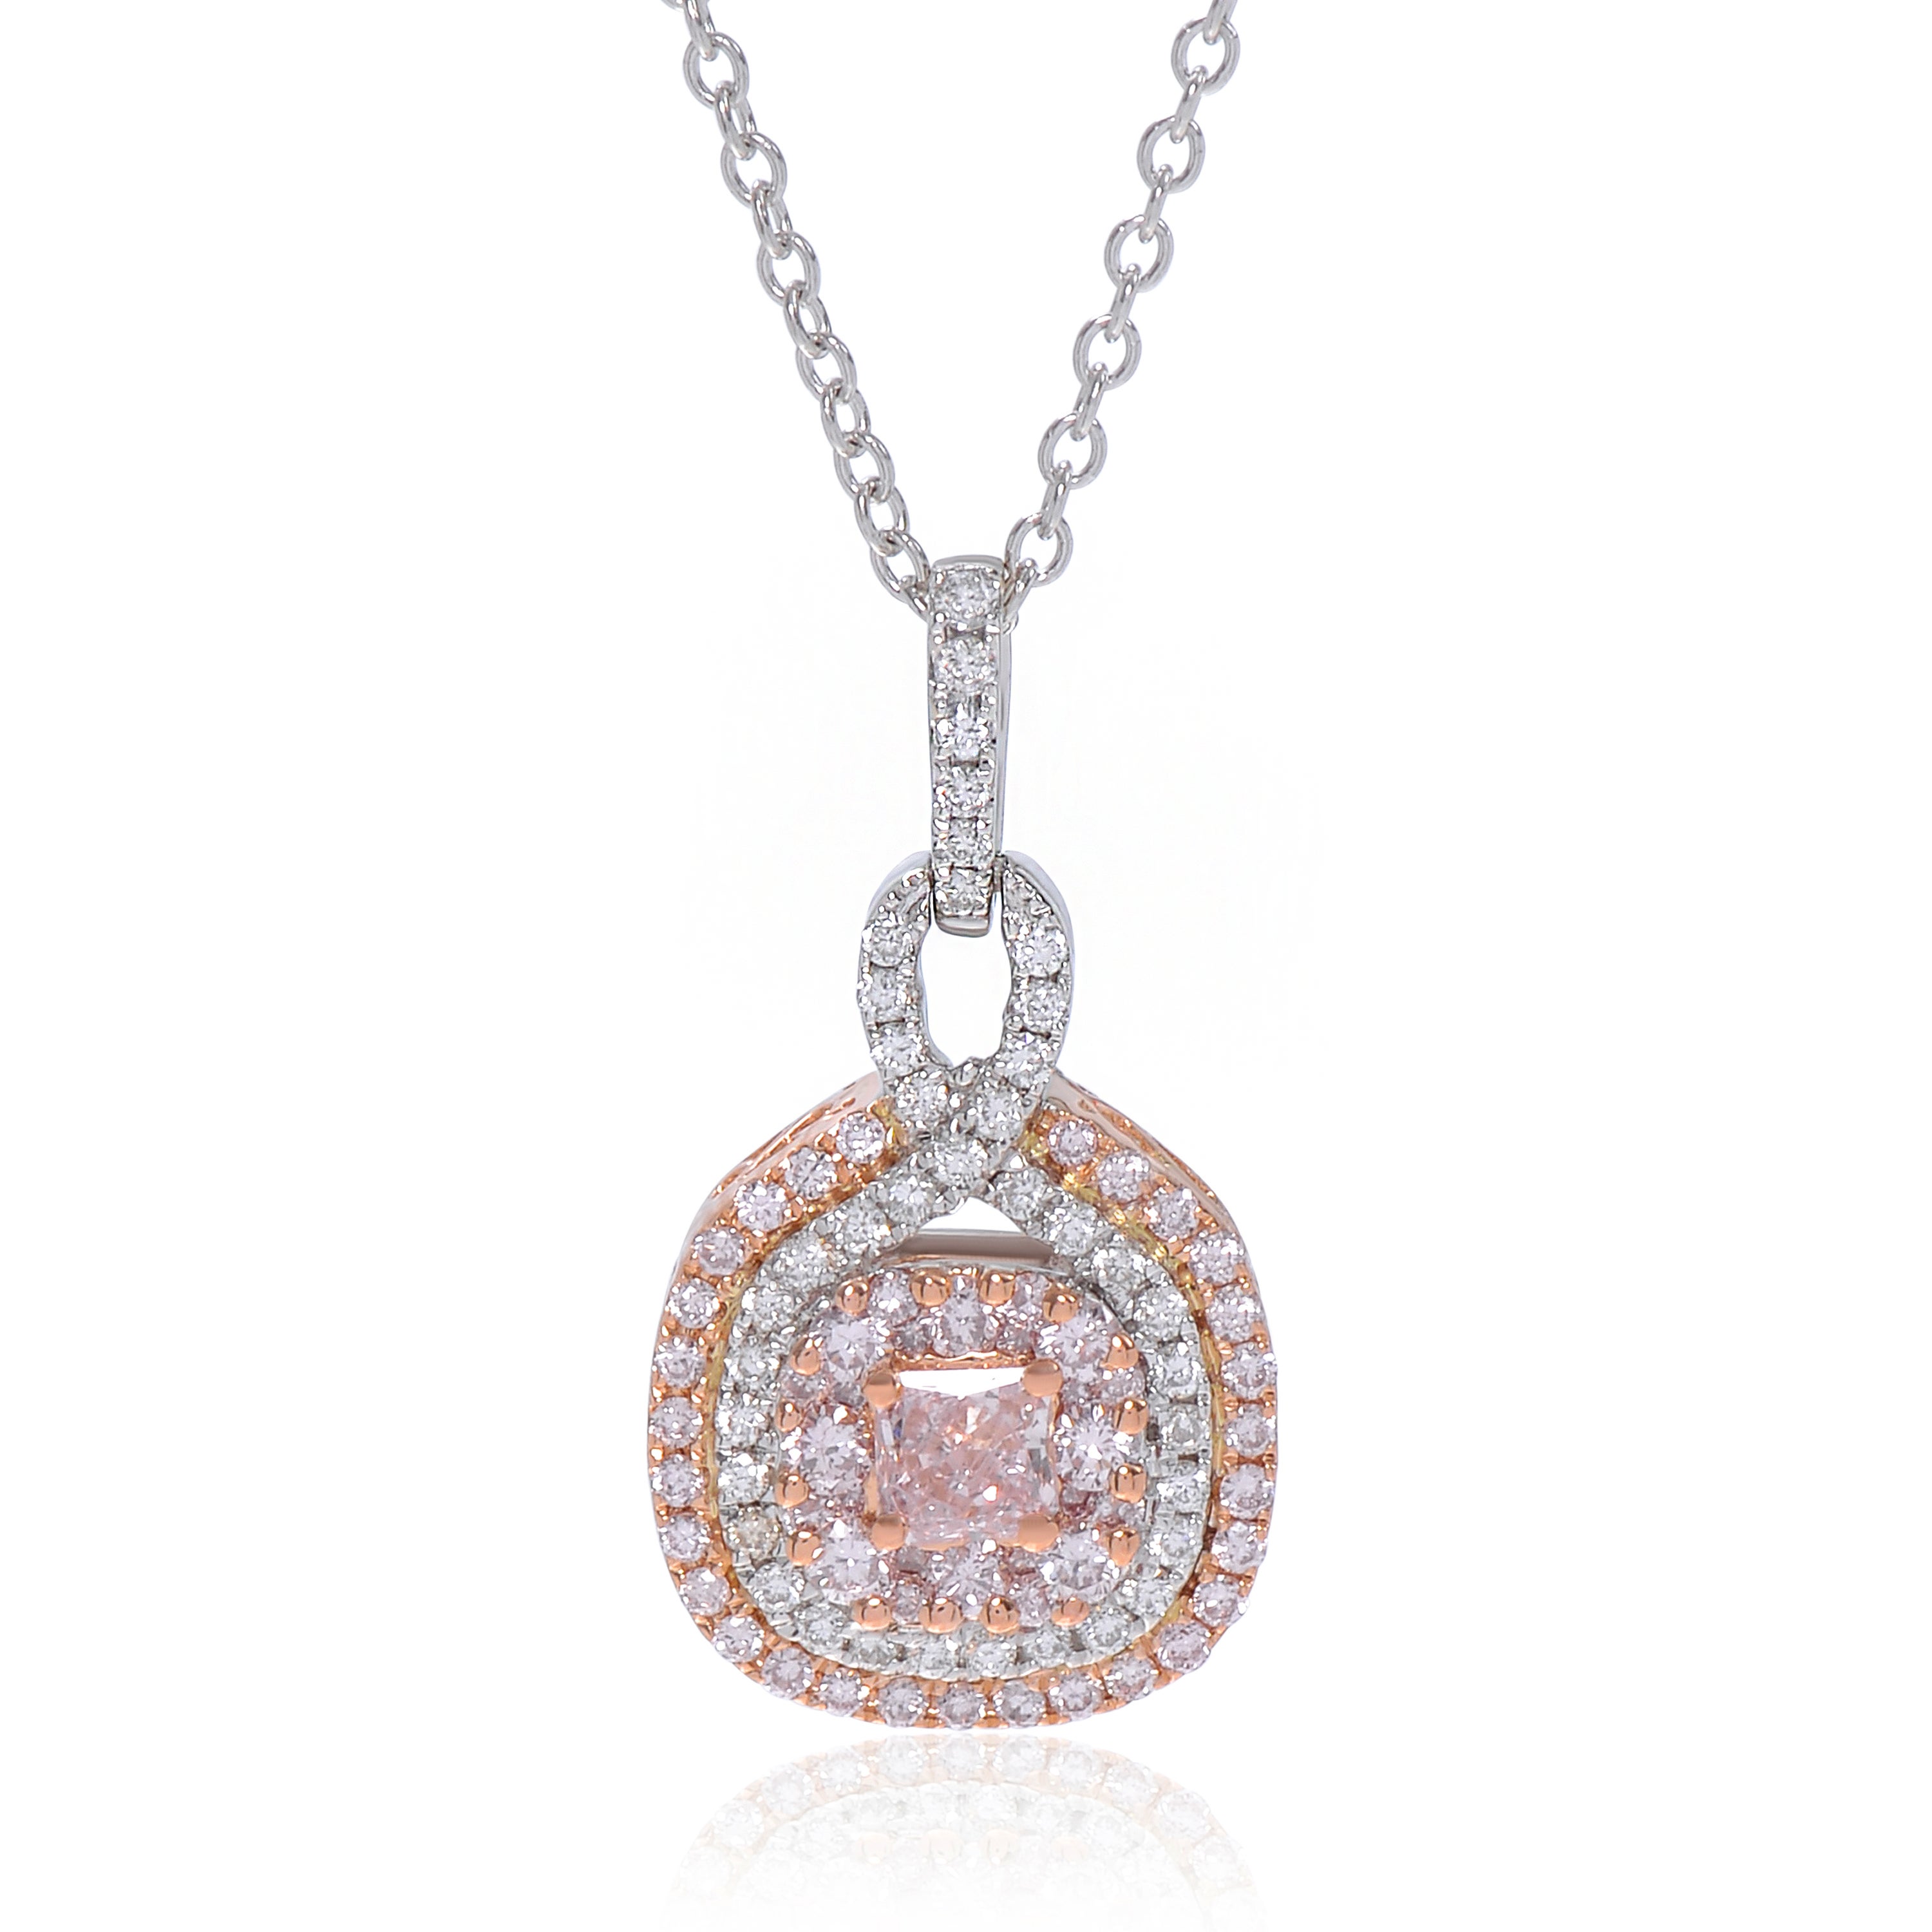 Gregg Ruth 18k Gold, Pink & White Diamond Pendant Necklace